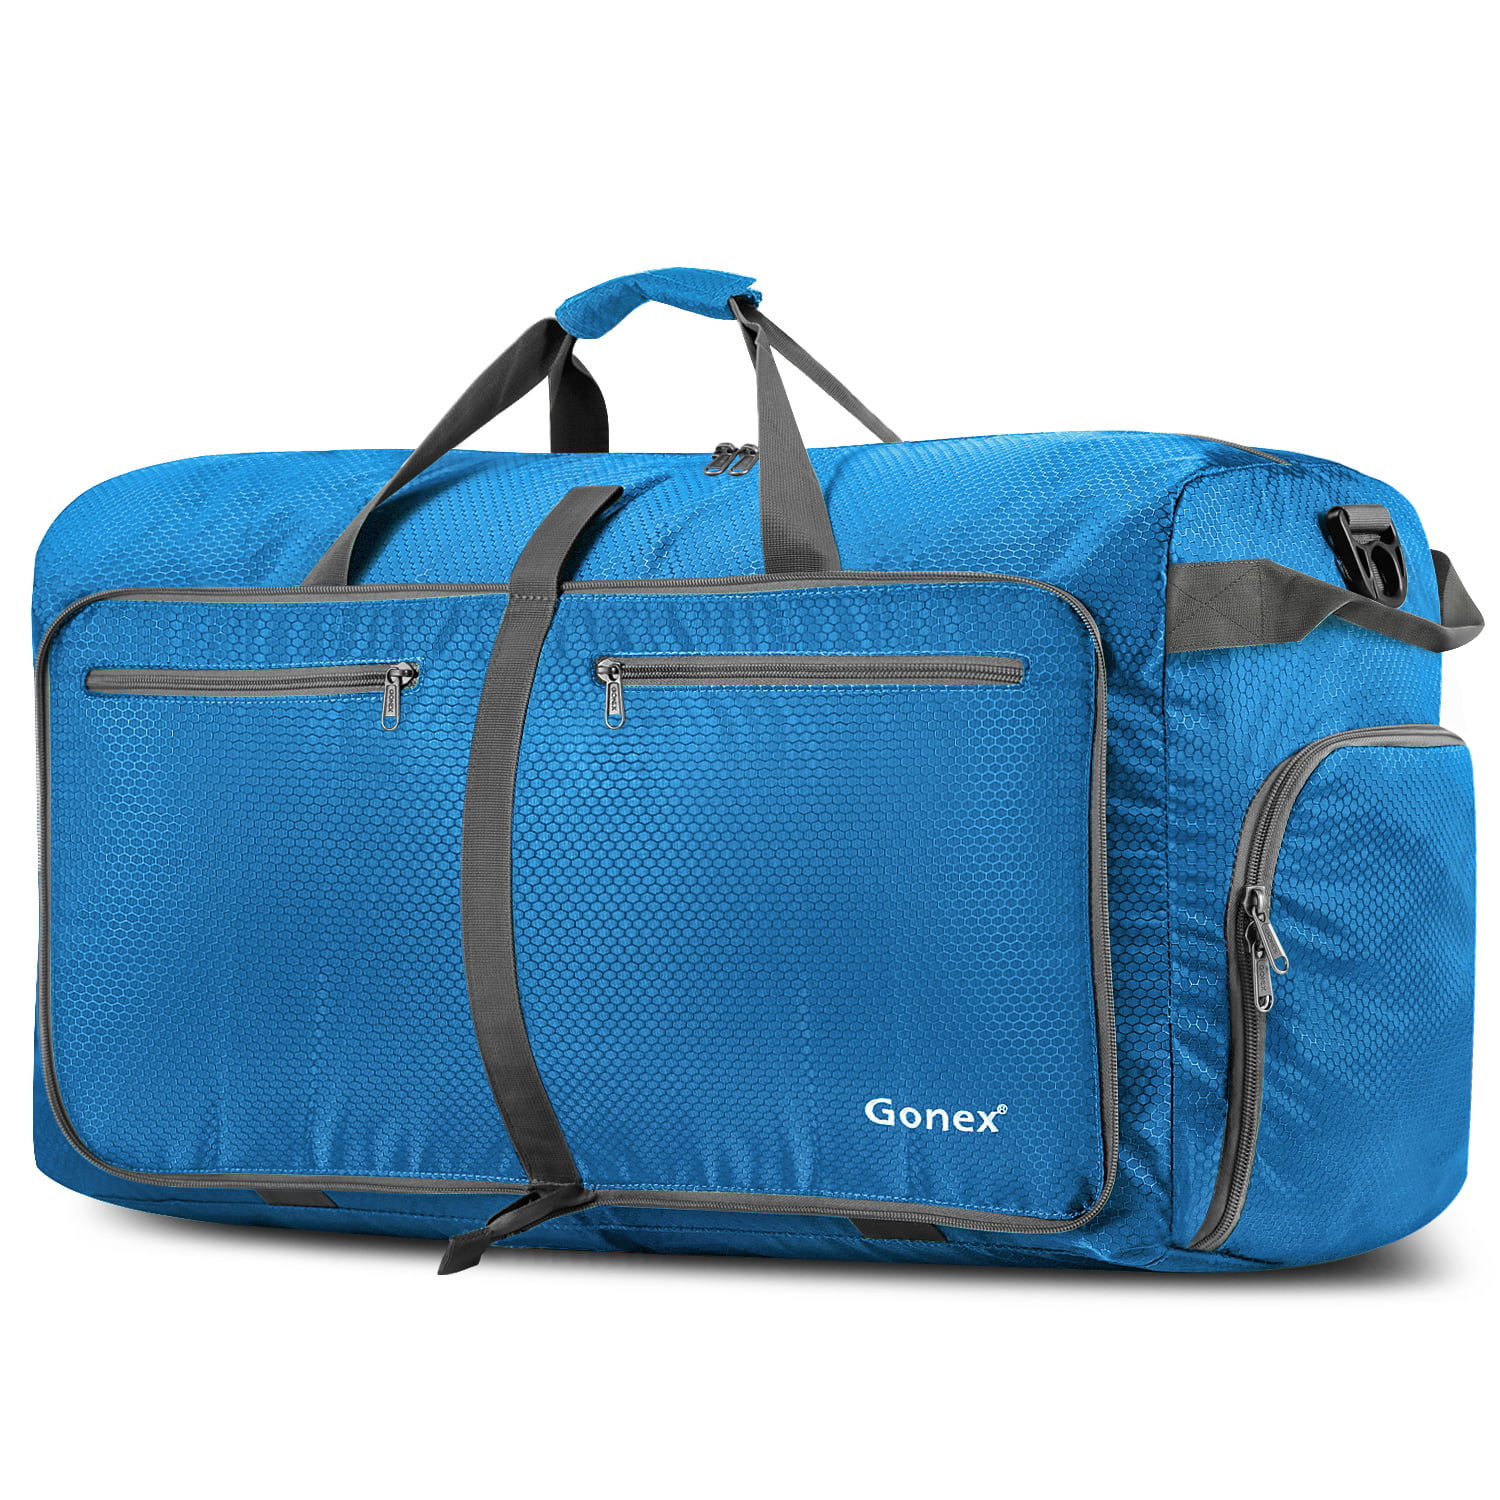 Gonex 100L Foldable Travel Duffle Bag, Extra Large Luggage Duffel blue - www.semashow.com - www.semashow.com